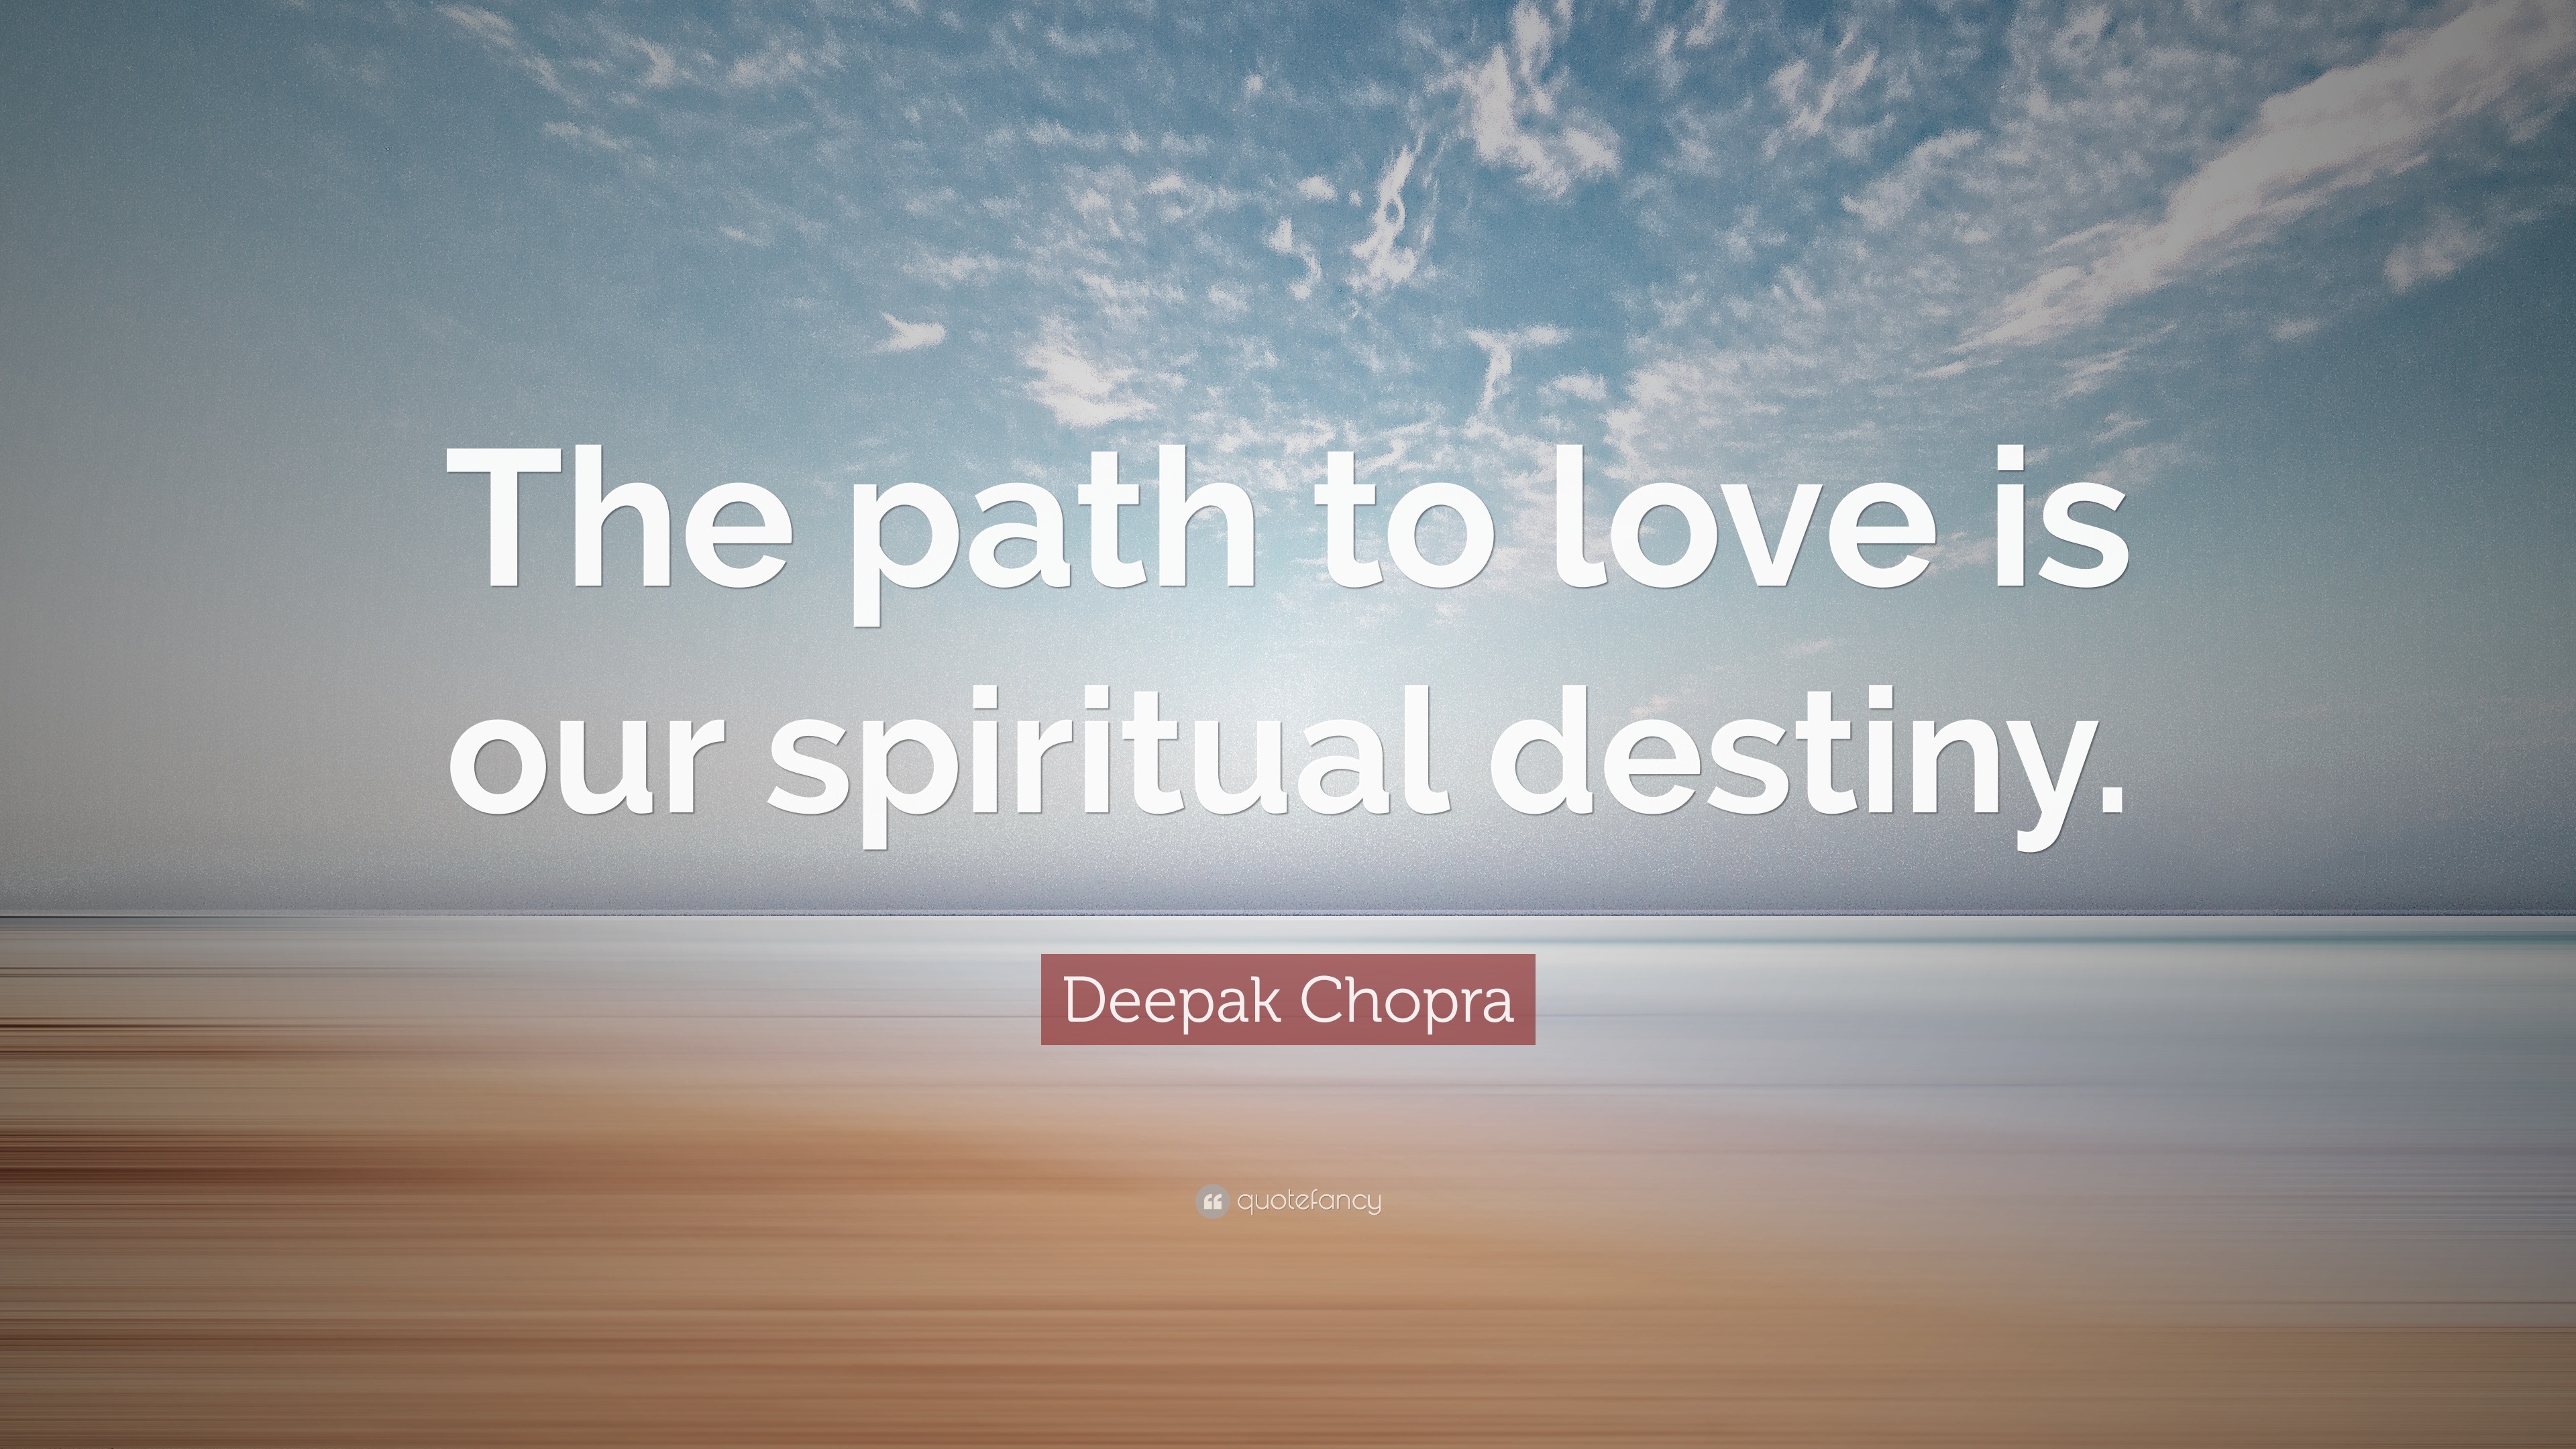 Deepak Chopra Quote “The path to love is our spiritual destiny ”